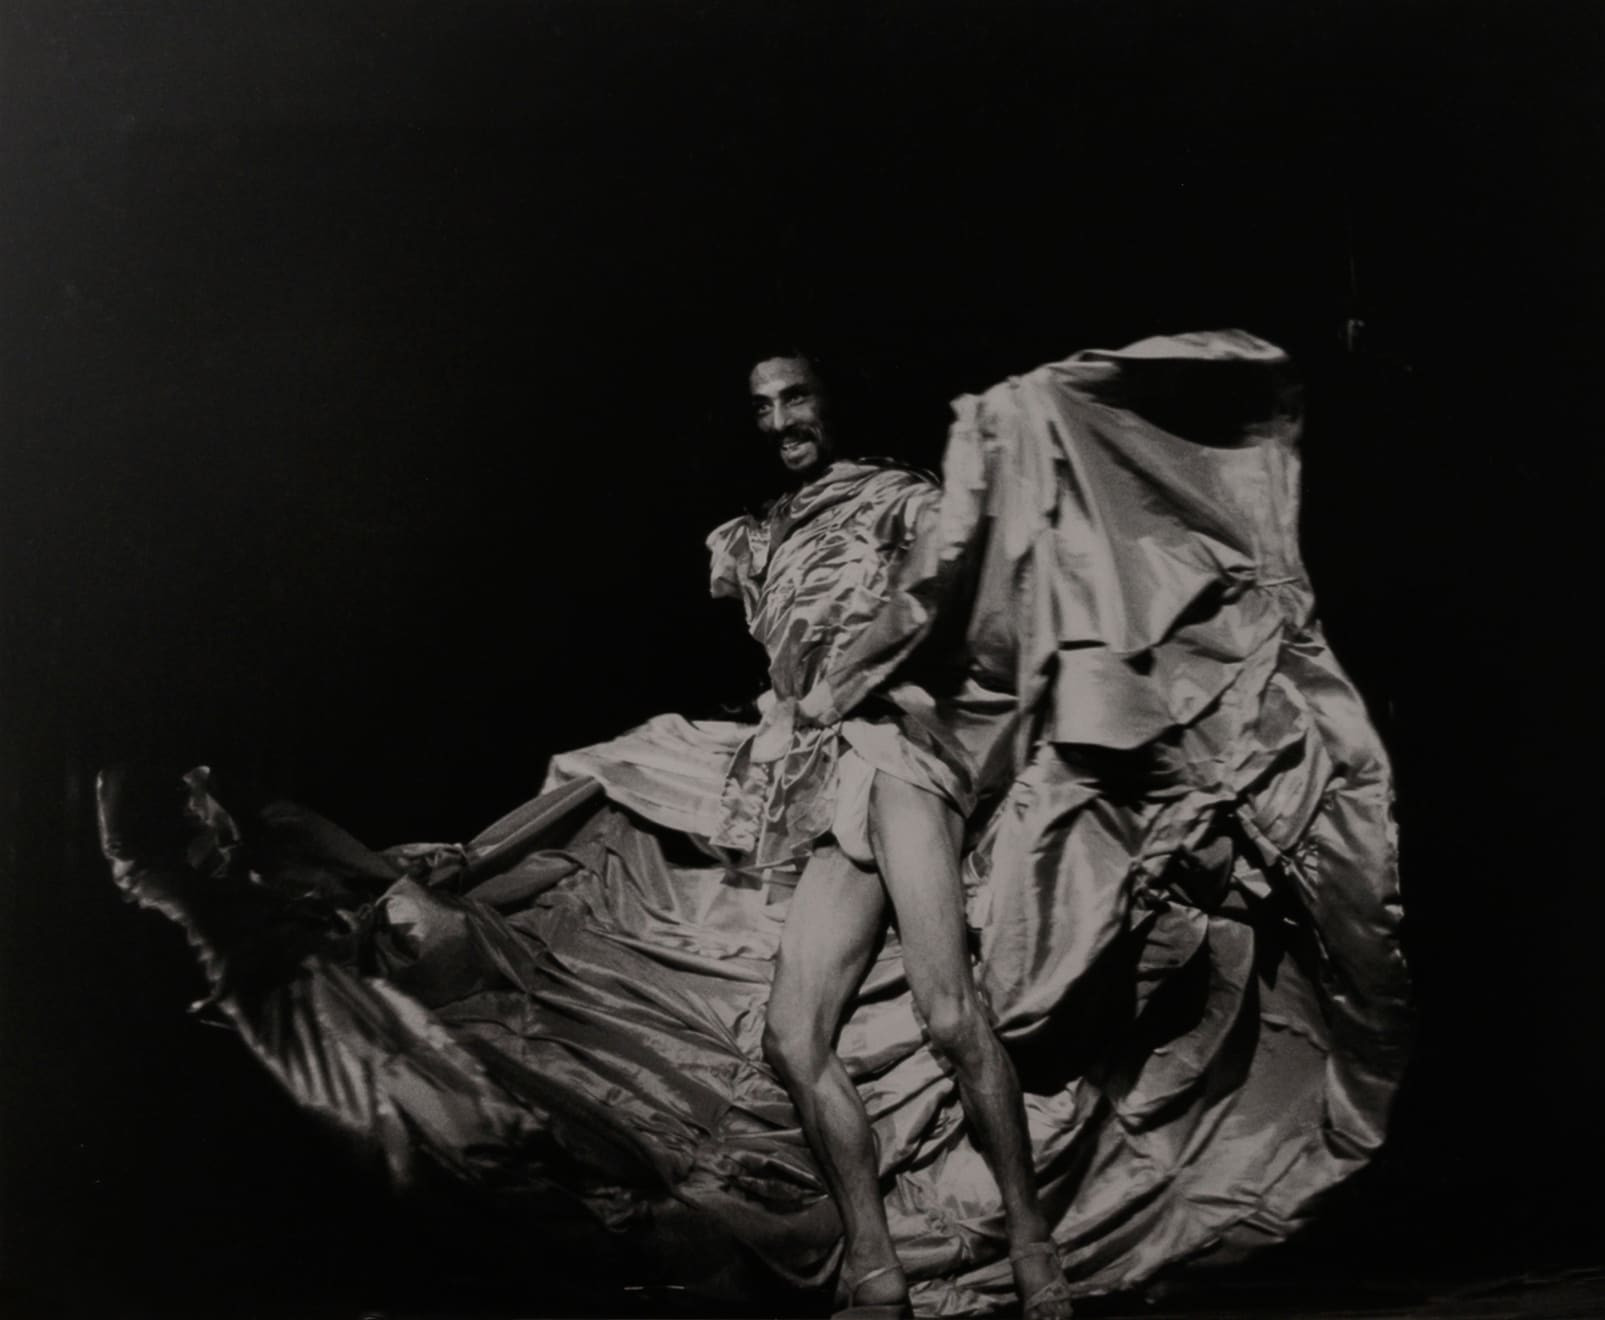 Тацуми Хидзиката, «Бунт тела (Красное платье)». Фото: Року Хасигава (Roku Hasegawa), 1968